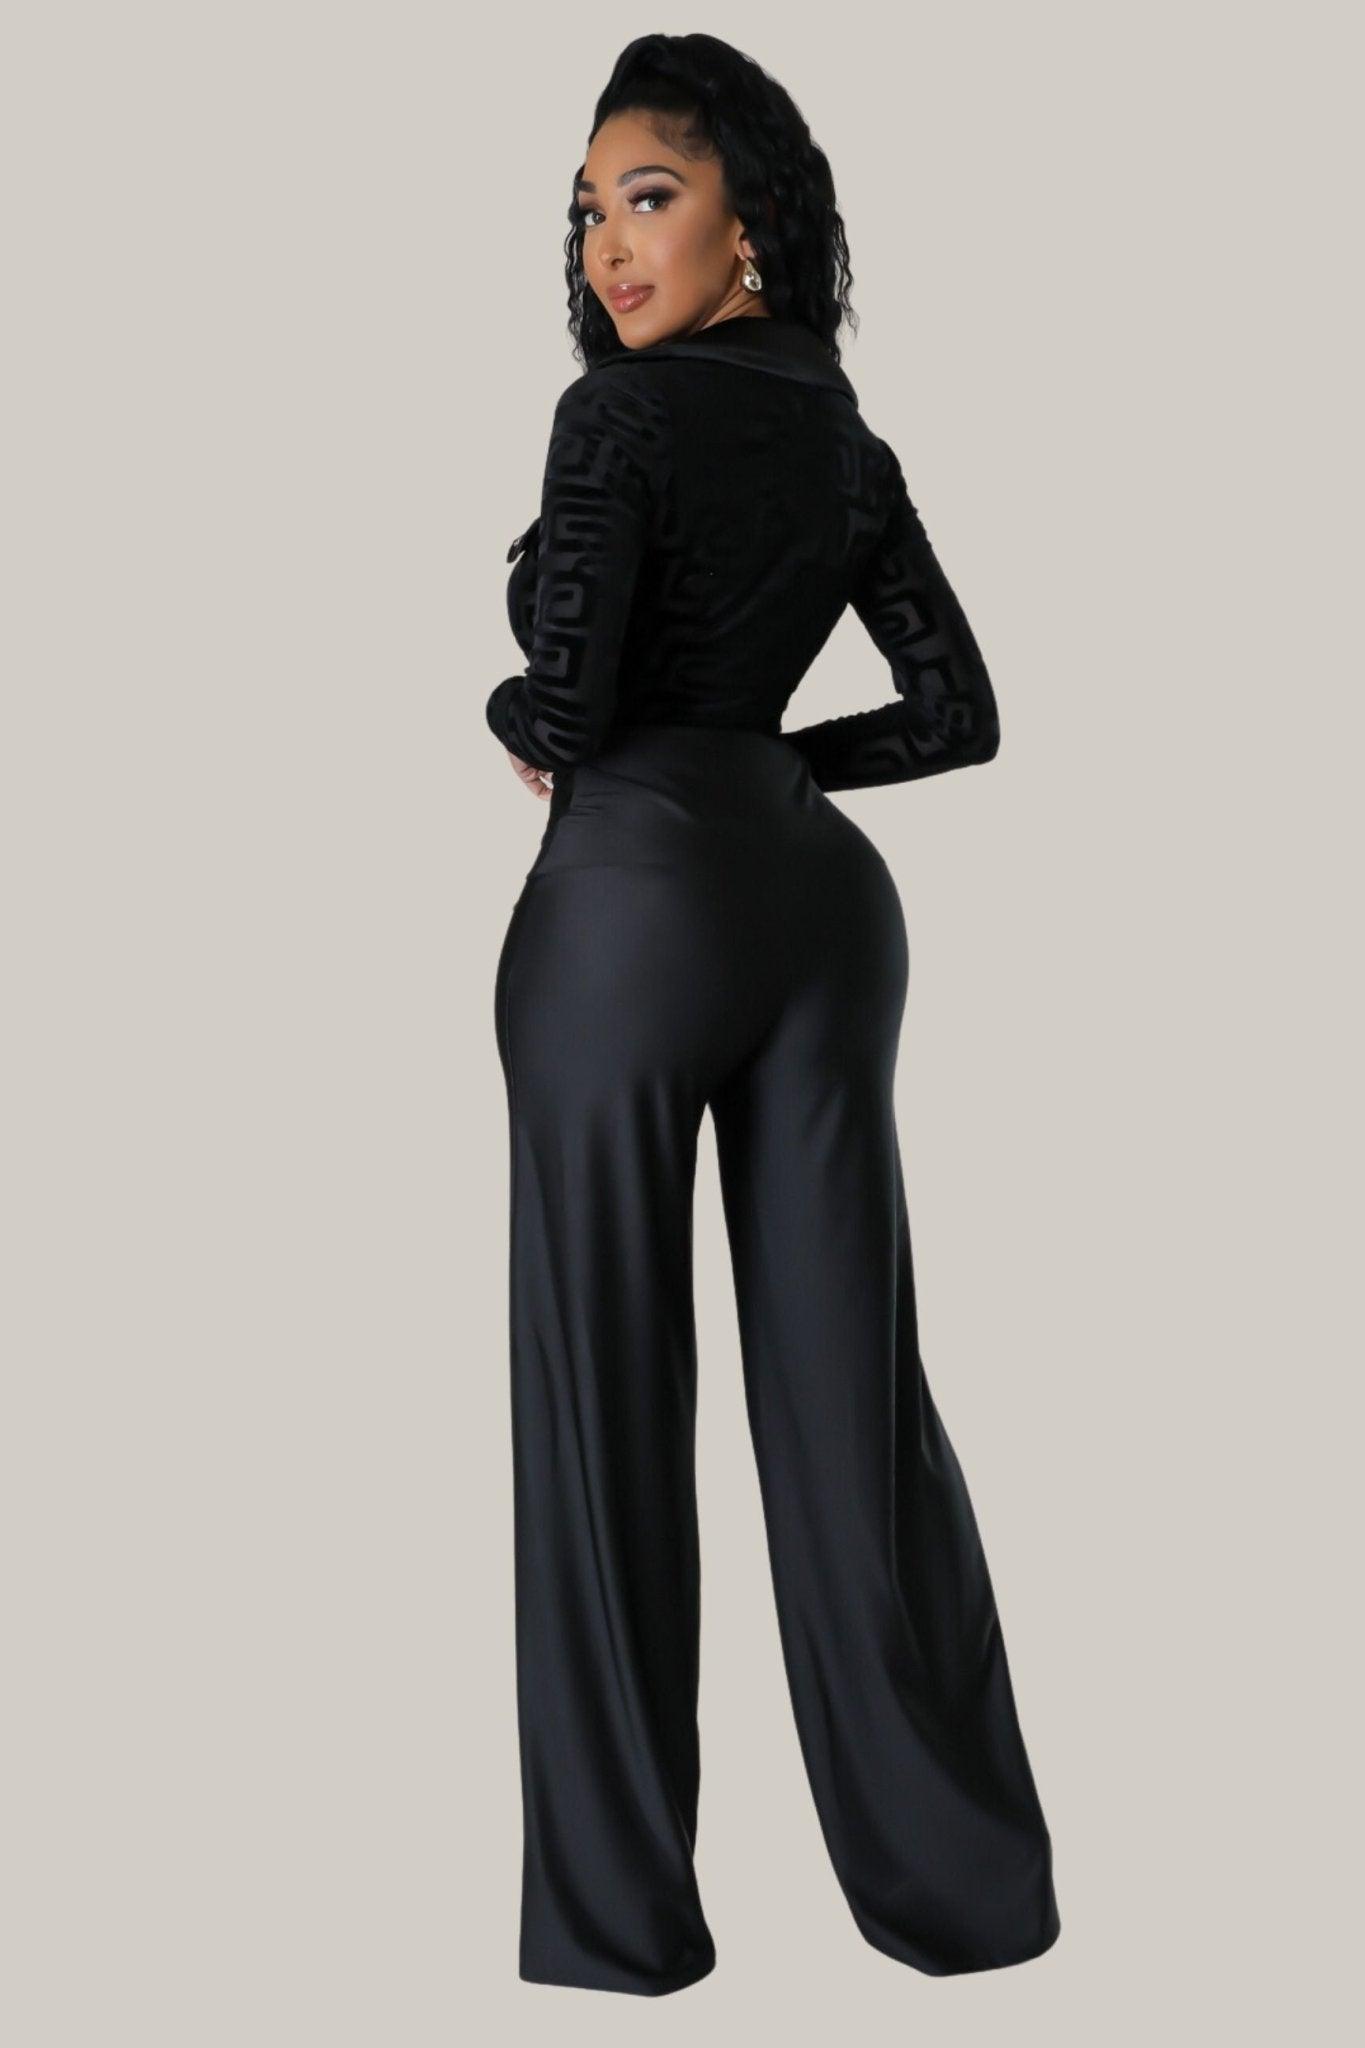 Seraphina Bodysuit Pant Set - MY SEXY STYLES